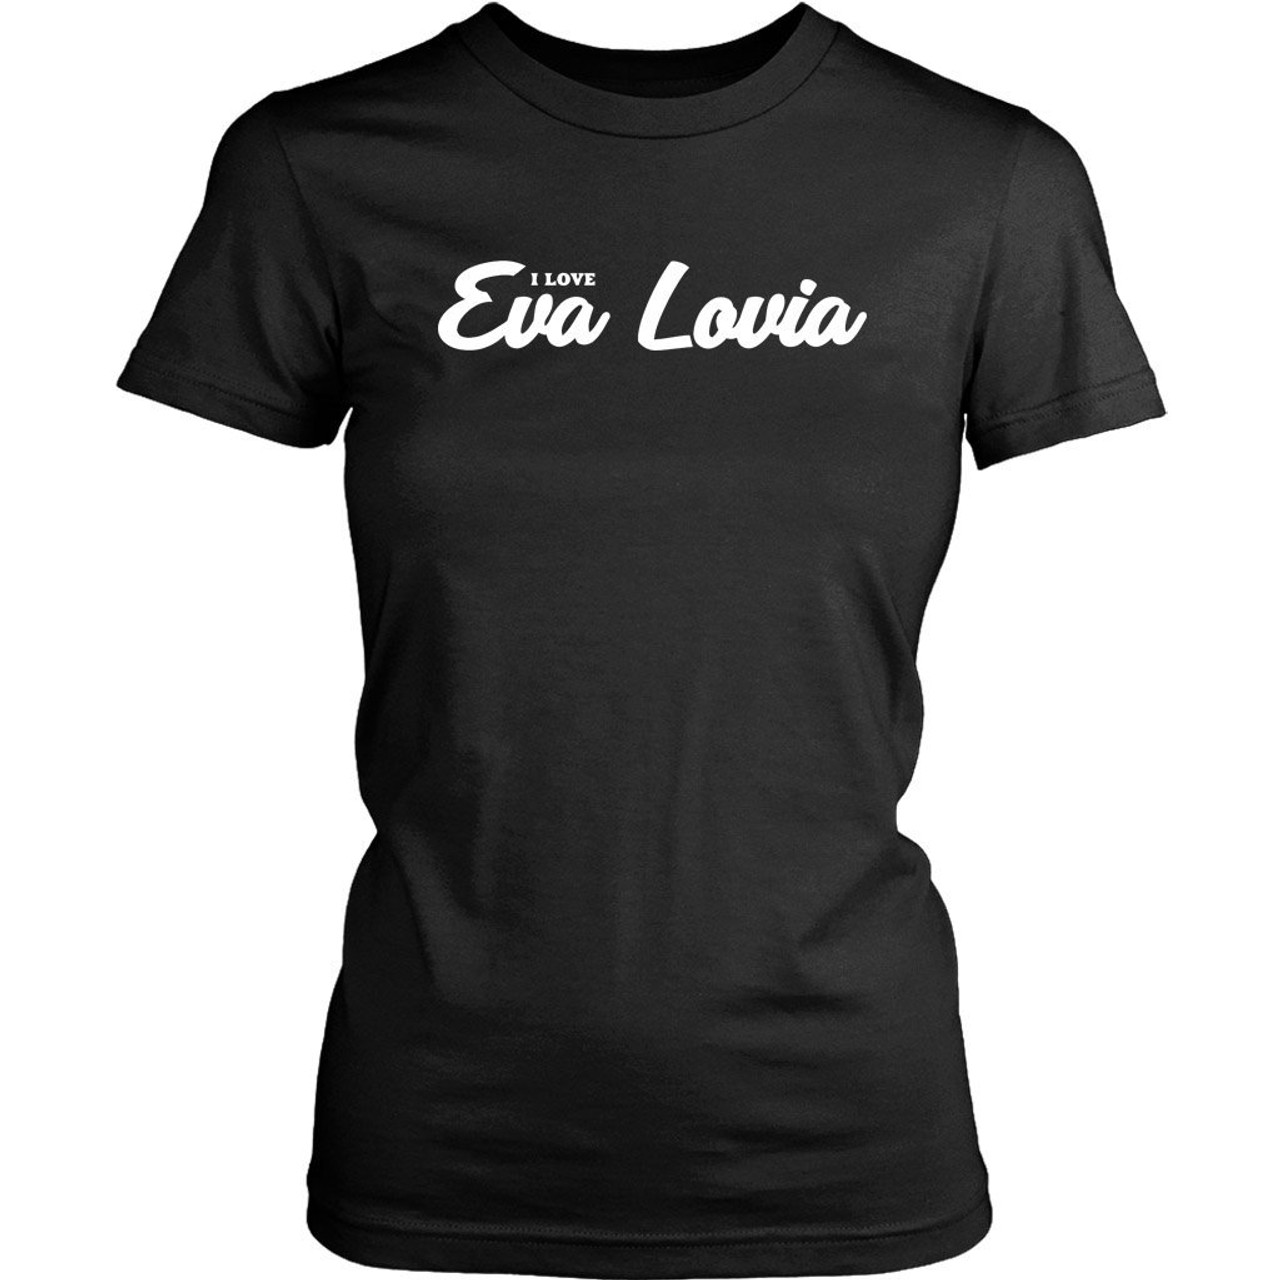 I Love Eva Lovia Women's T-Shirt Tee